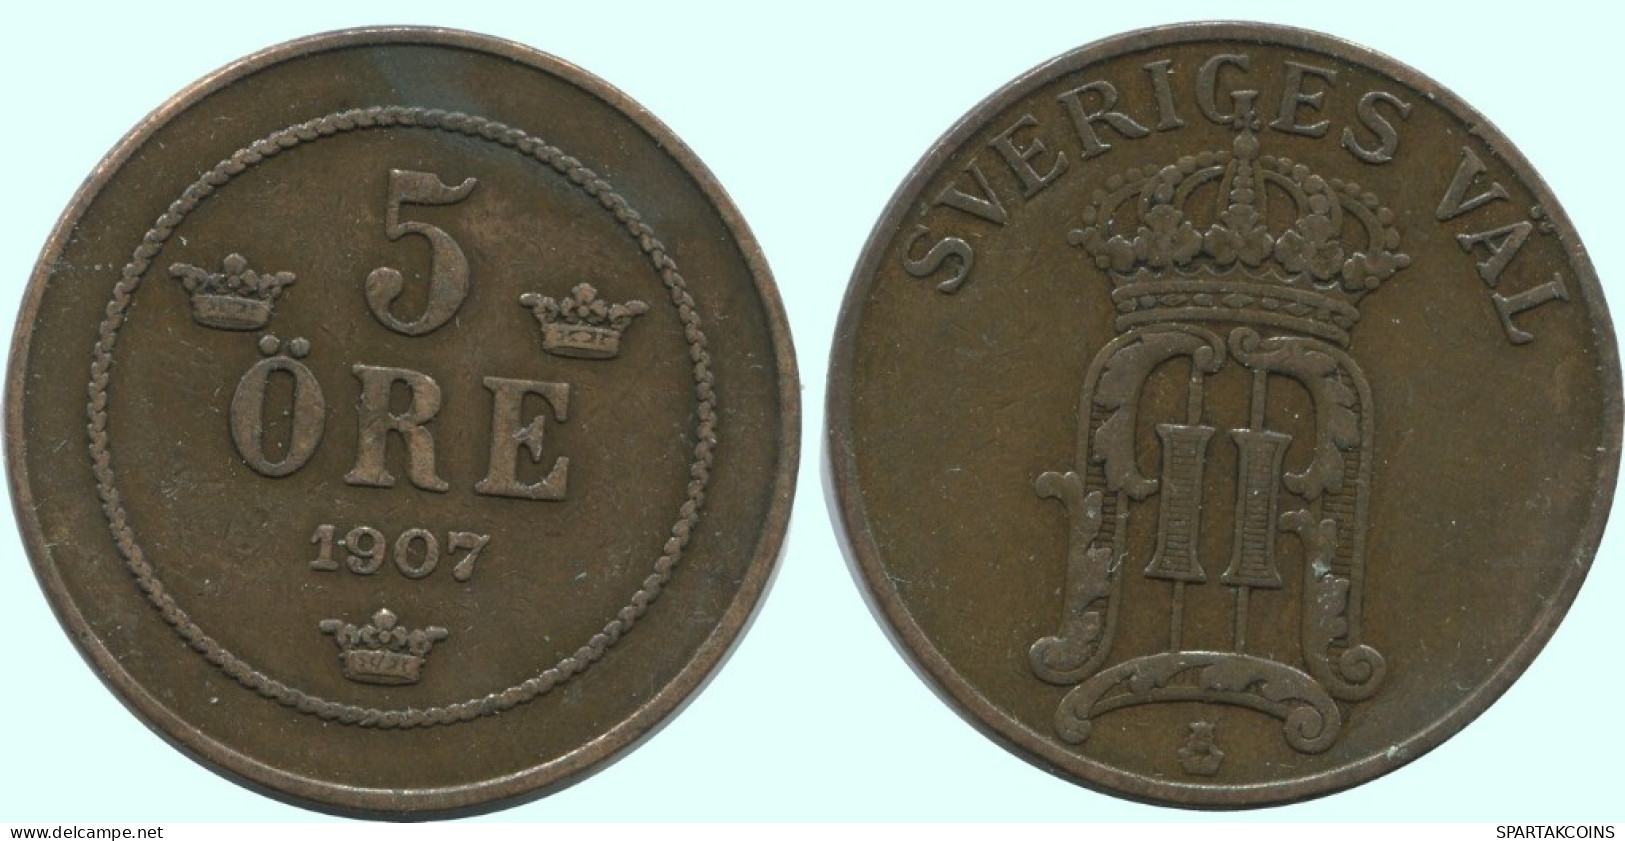 5 ORE 1907 SUECIA SWEDEN Moneda #AC682.2.E.A - Sweden